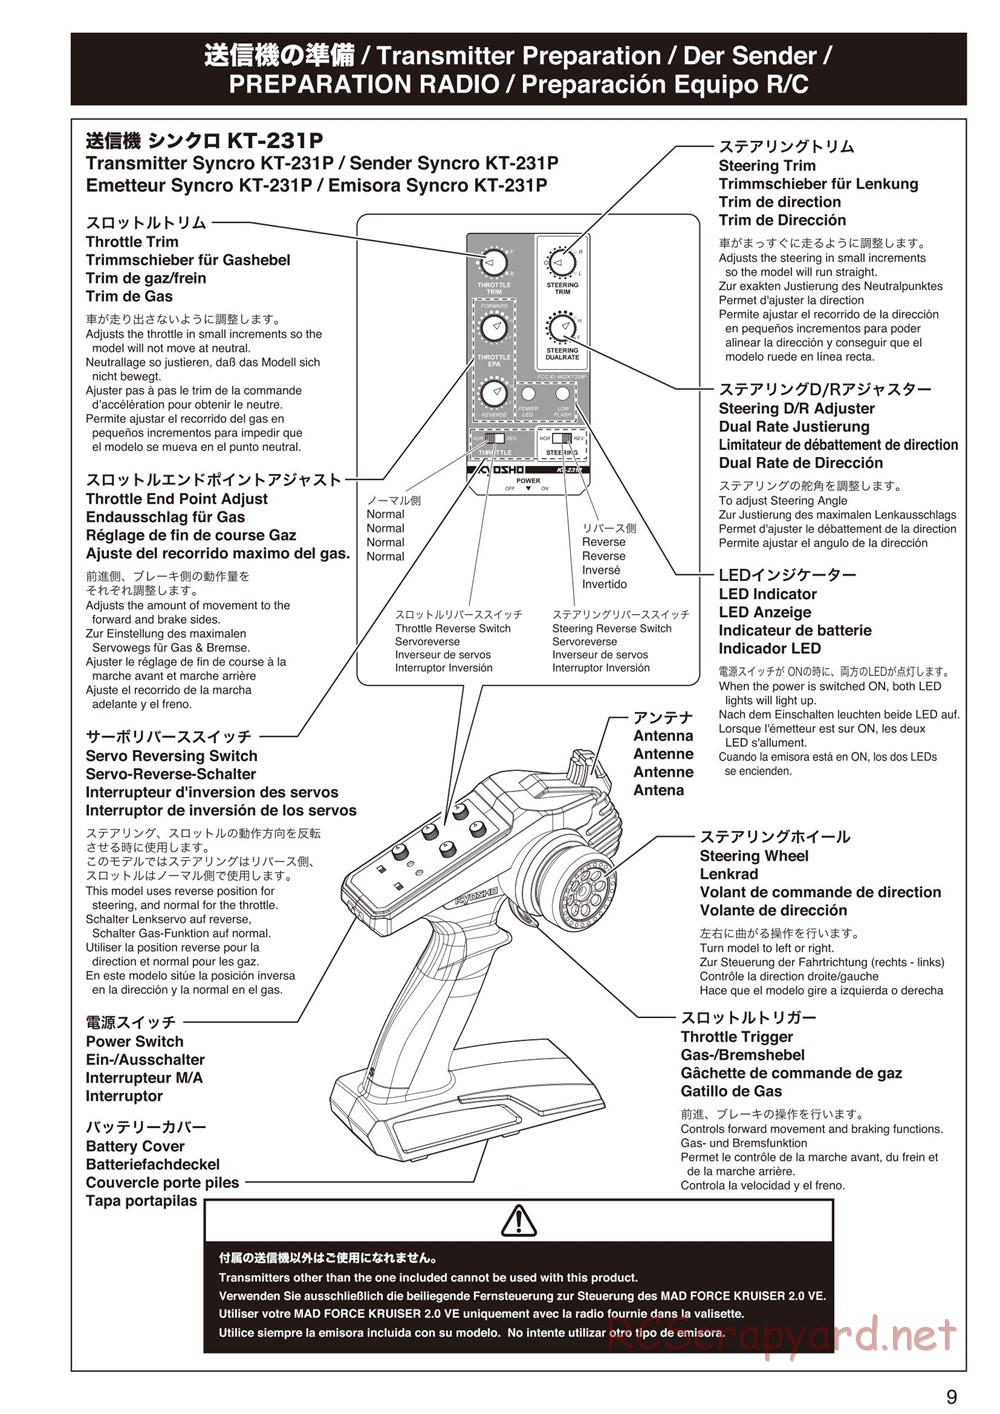 Kyosho - Mad Force Kruiser 2.0 VE - Manual - Page 9